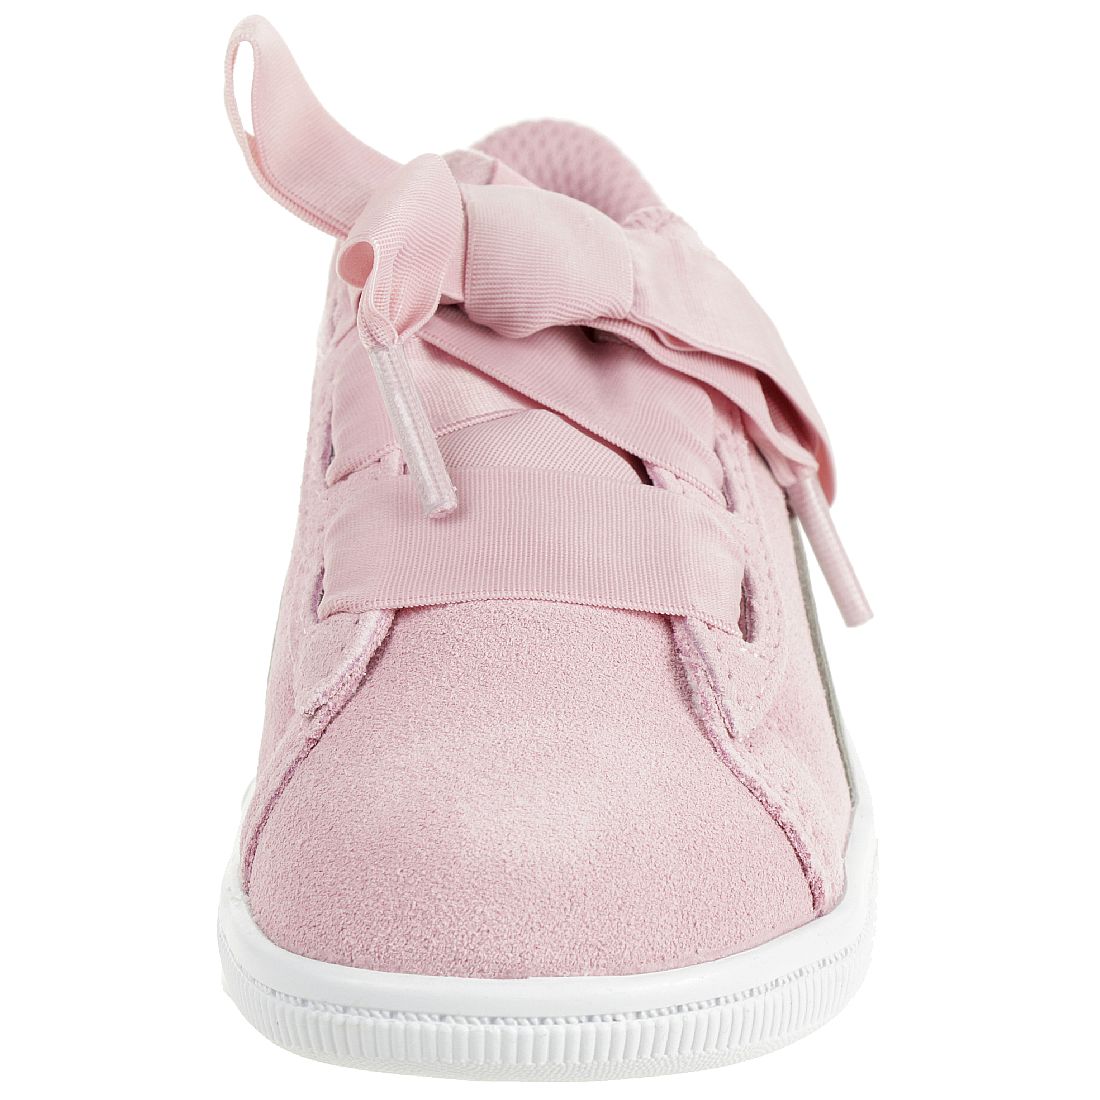 Puma Vikky Ribbon AC Inf Sneaker Baby Mädchen Schuhe Leder 367640 05 Pink